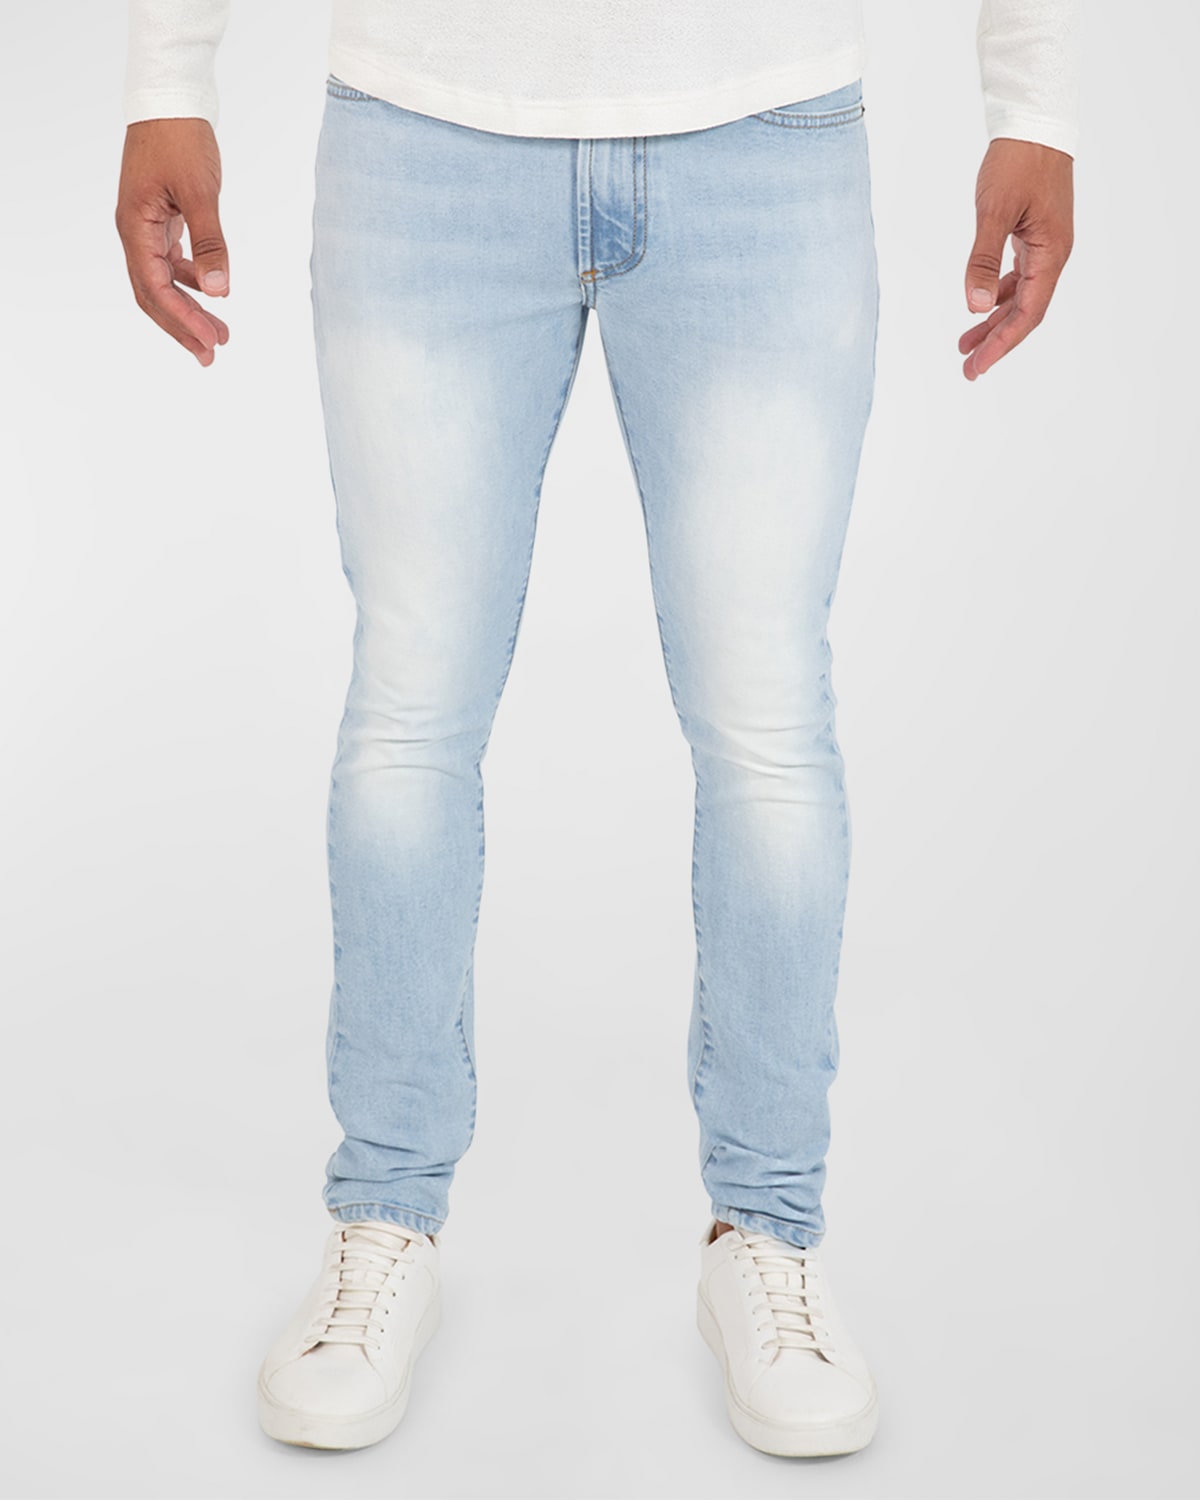 Men's Greyson Skinny Jeans